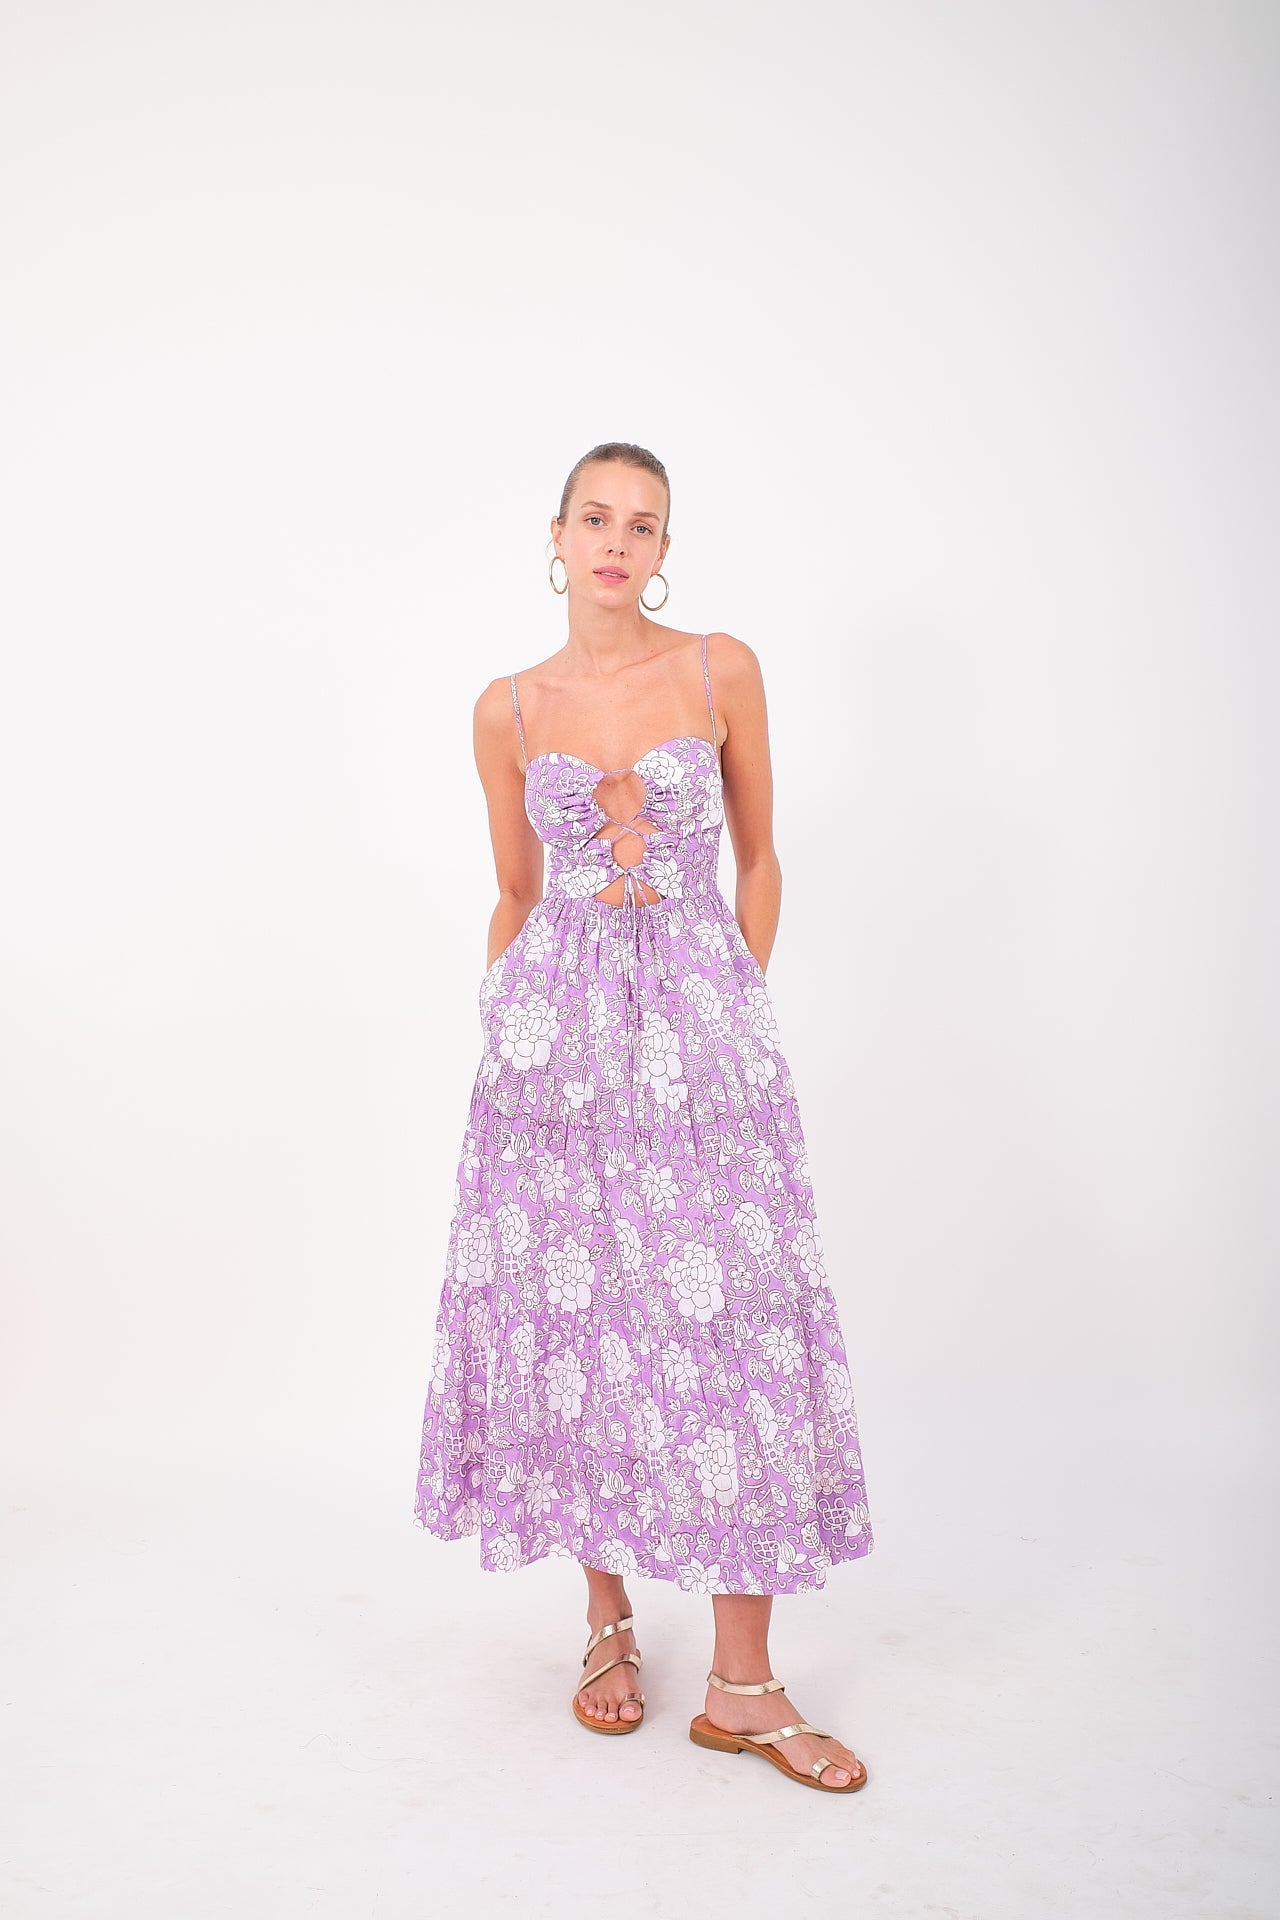 Isabella Dress - Violet Floral by Desert Queen